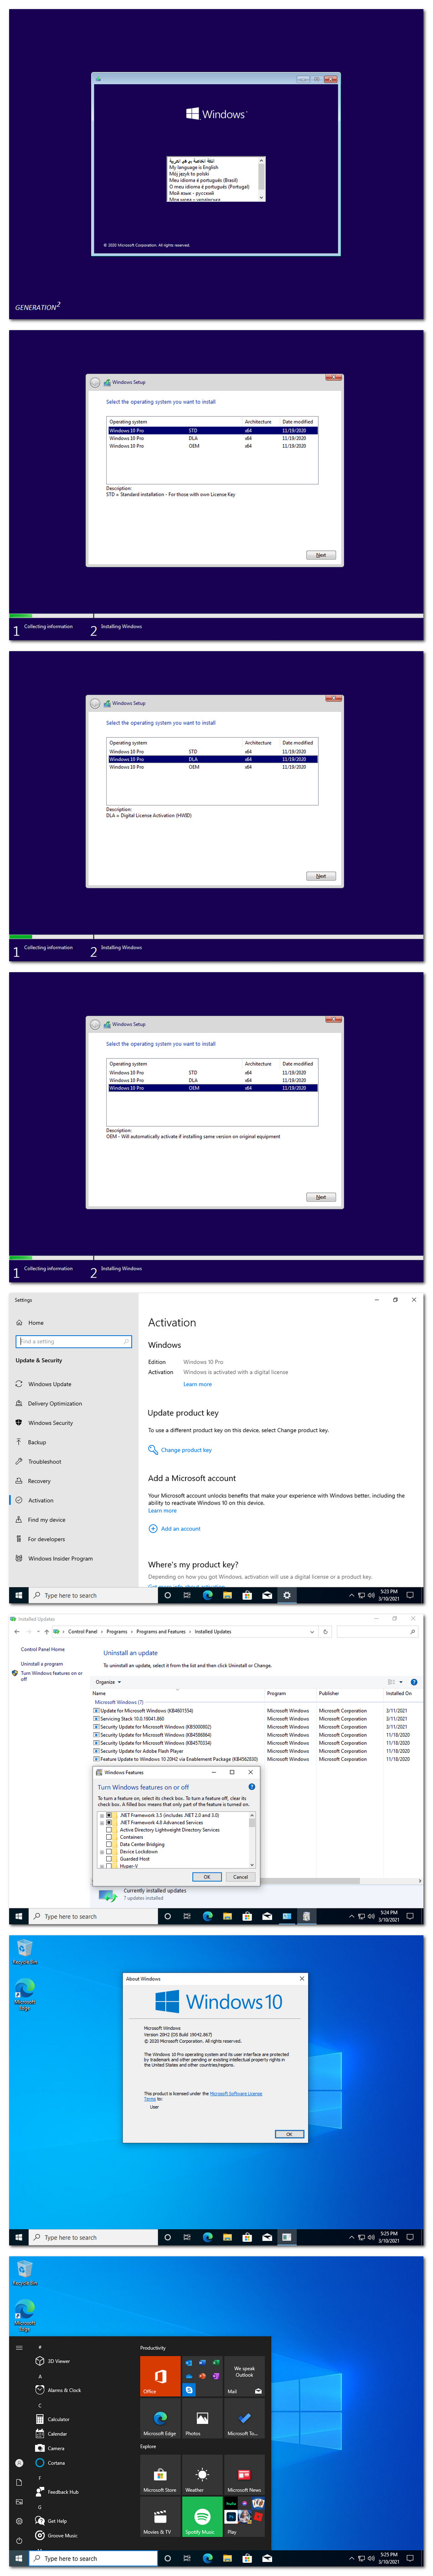      Windows 10 X64 20H2 Pro OEM ESD MULTi-7 MARCH 2021 {Gen2}  PlsgSc